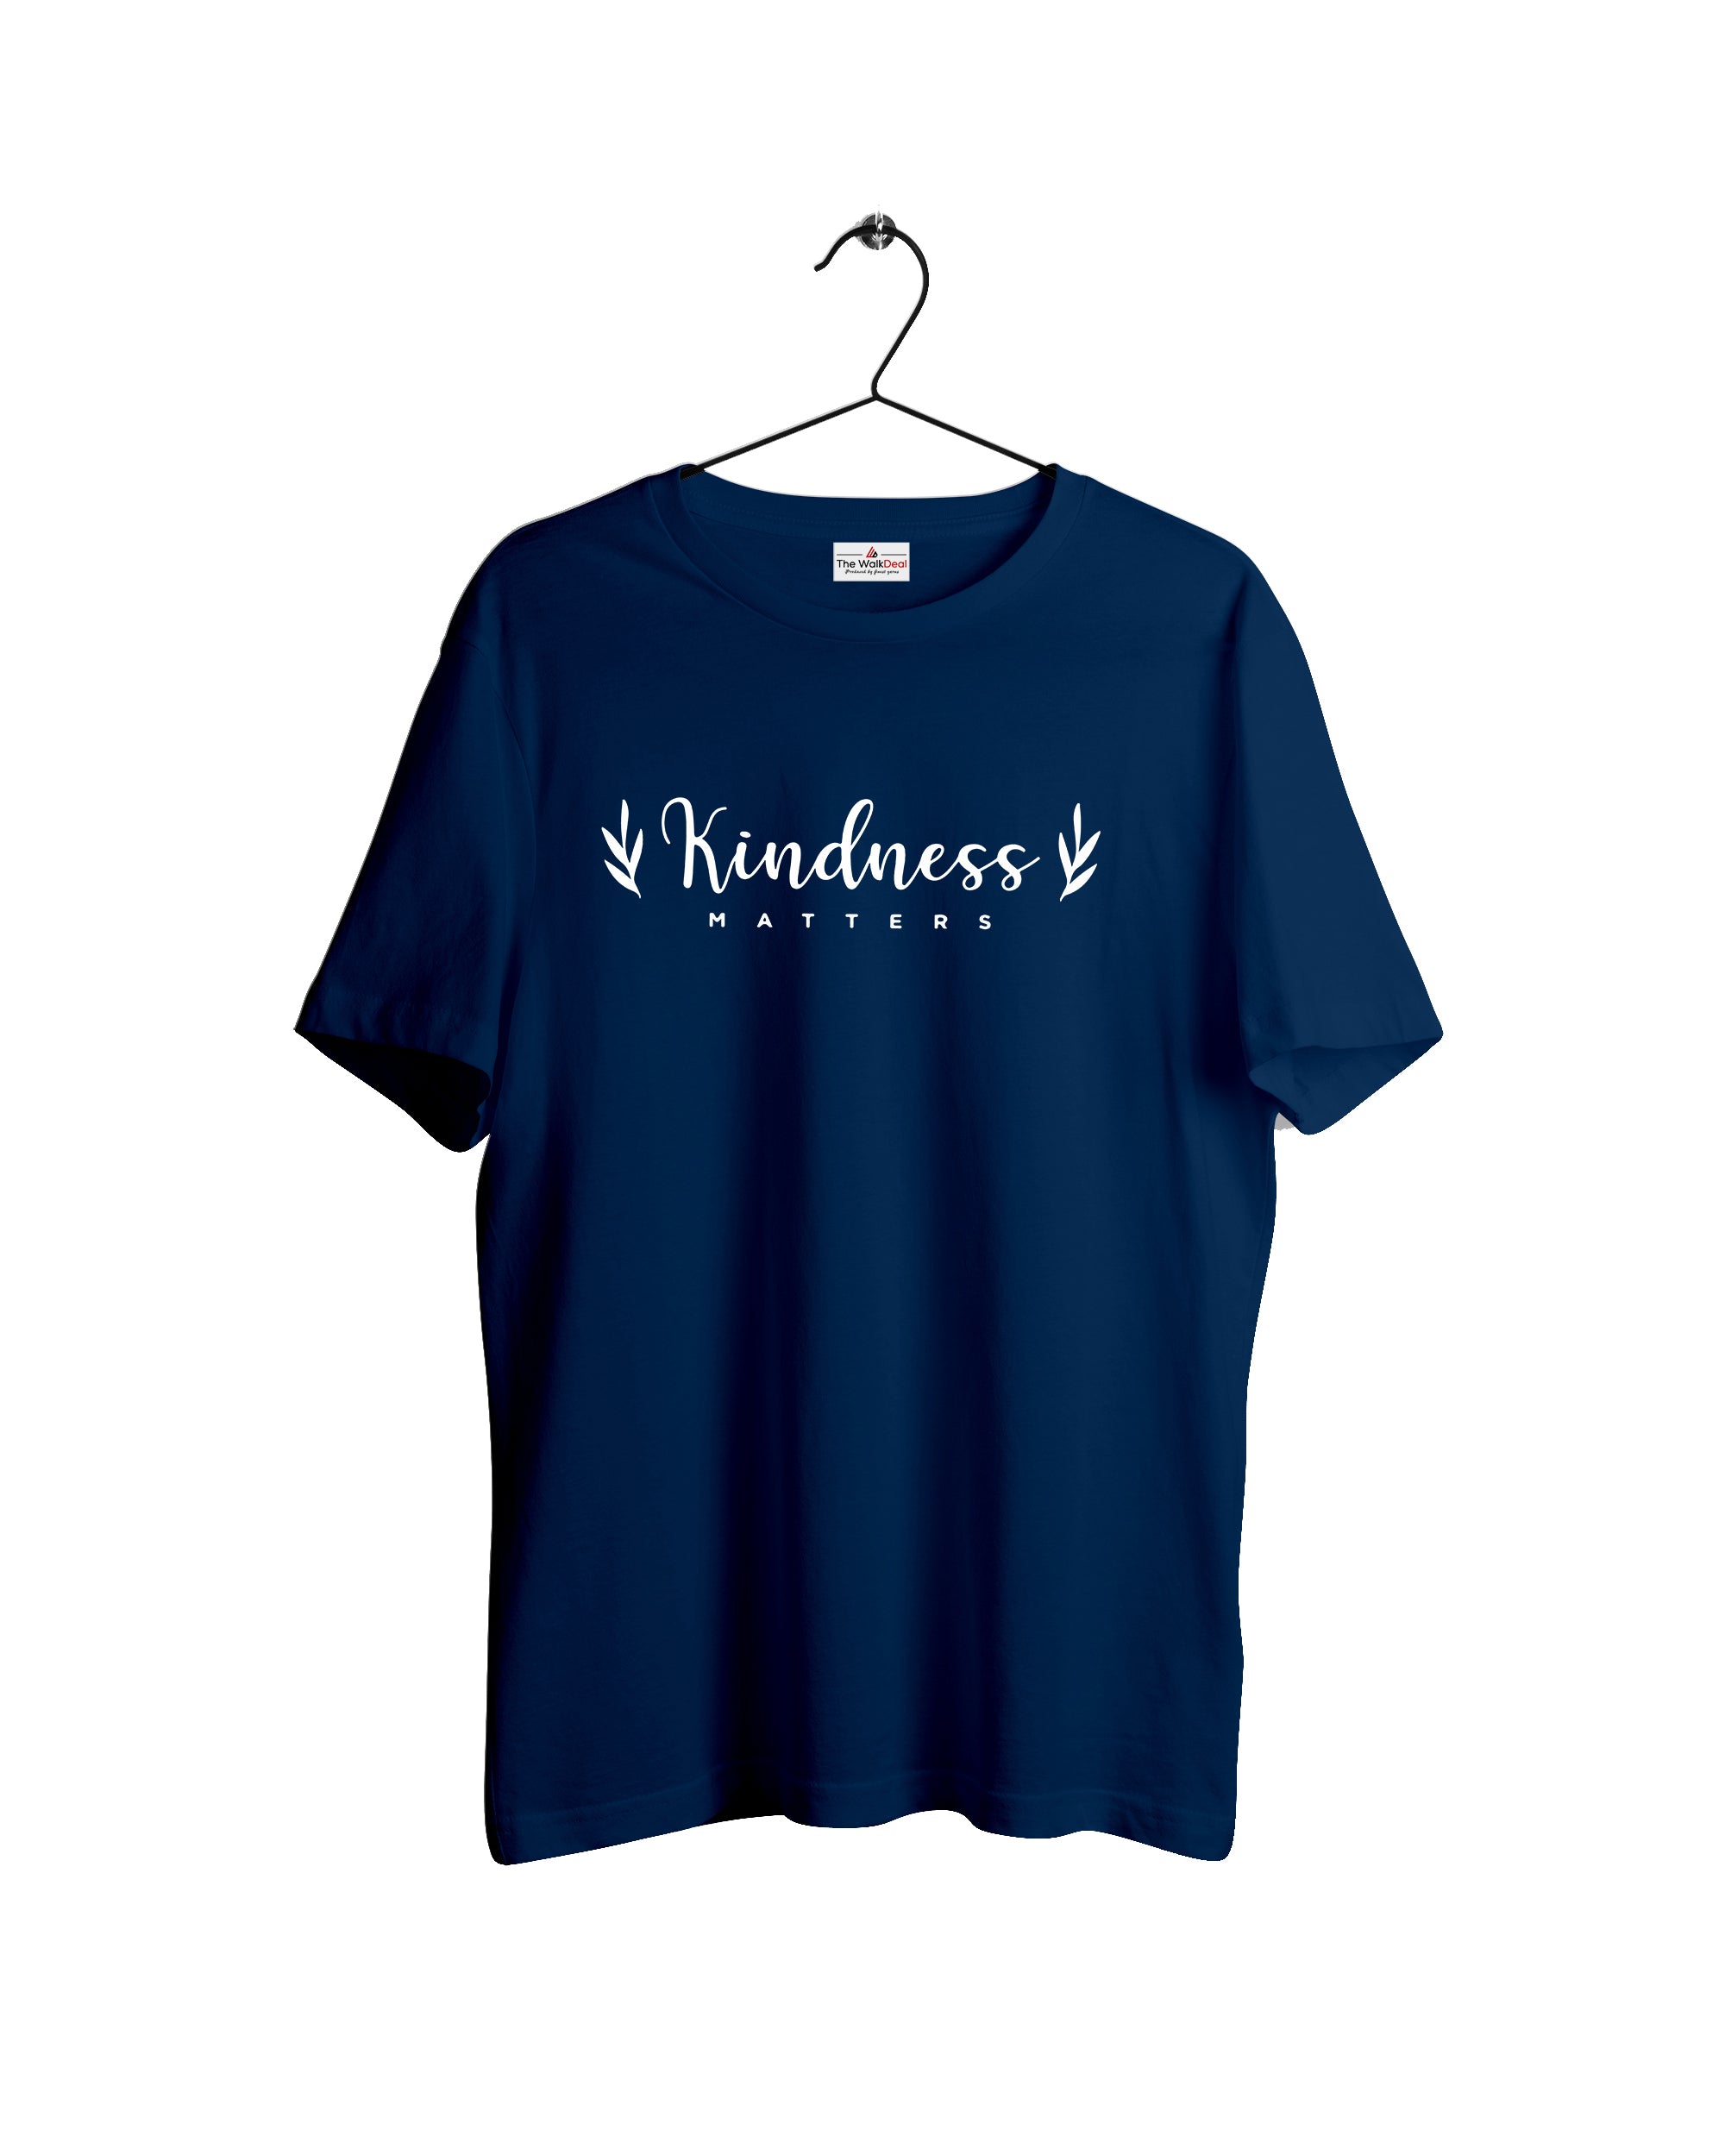 Kindness T-Shirt For Men